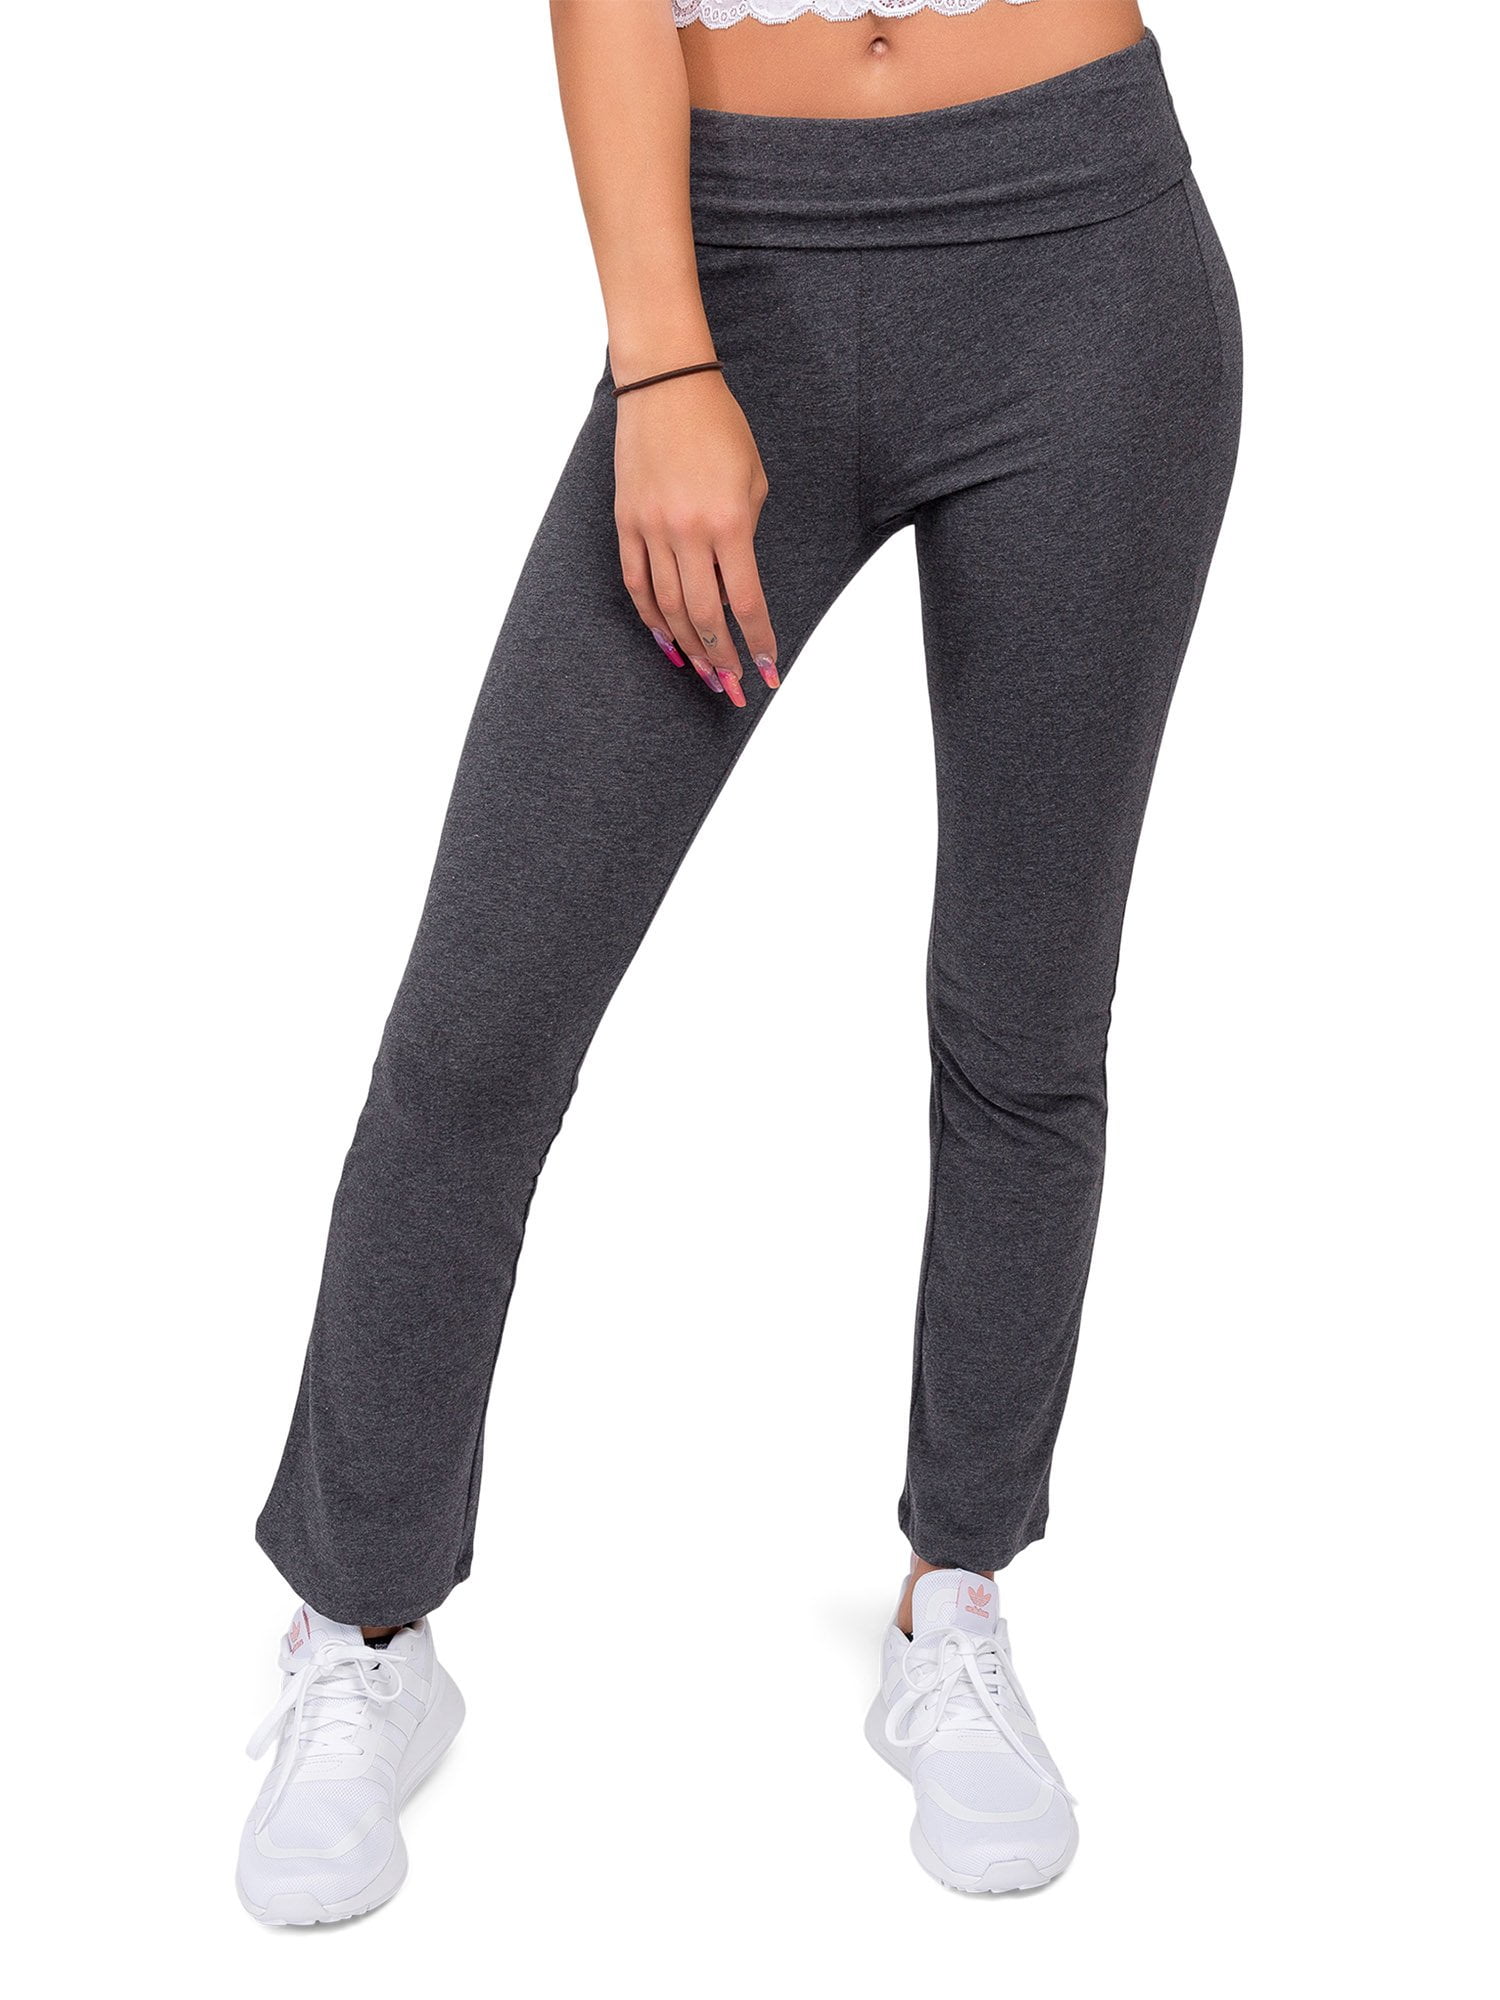 G-Style USA Women's Bootcut Flare Leggings Yoga Pants 8150 - Hot